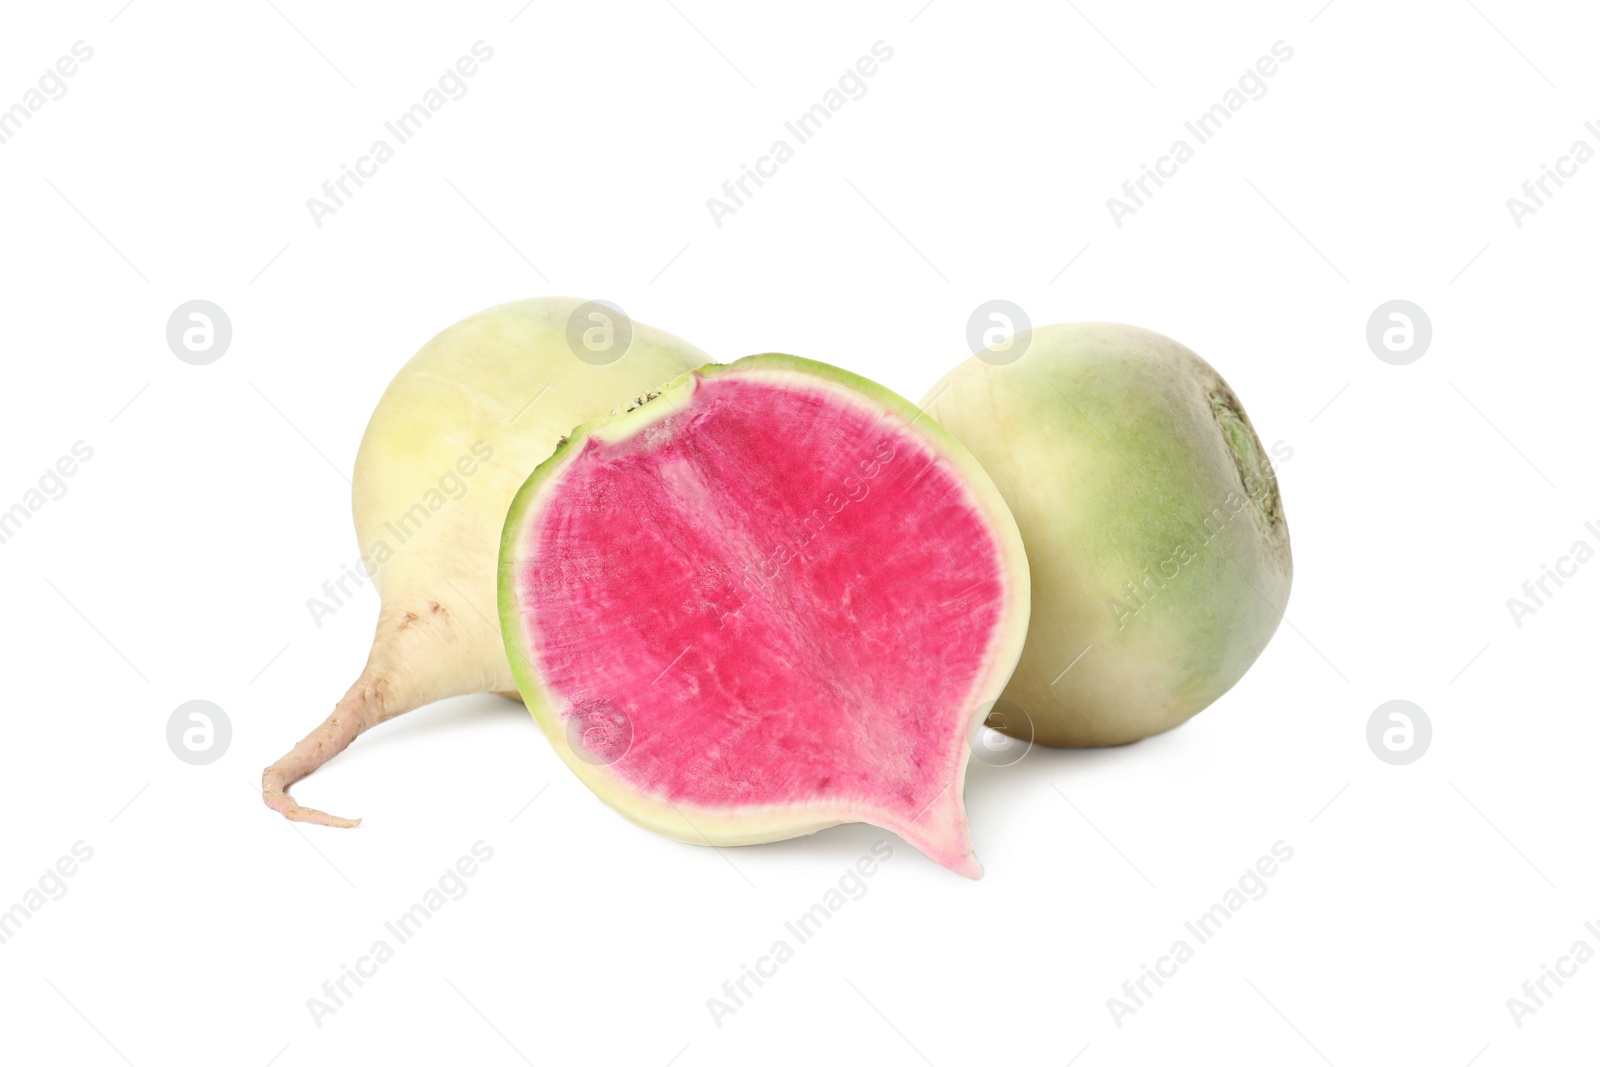 Photo of Cut and whole fresh ripe turnips on white background